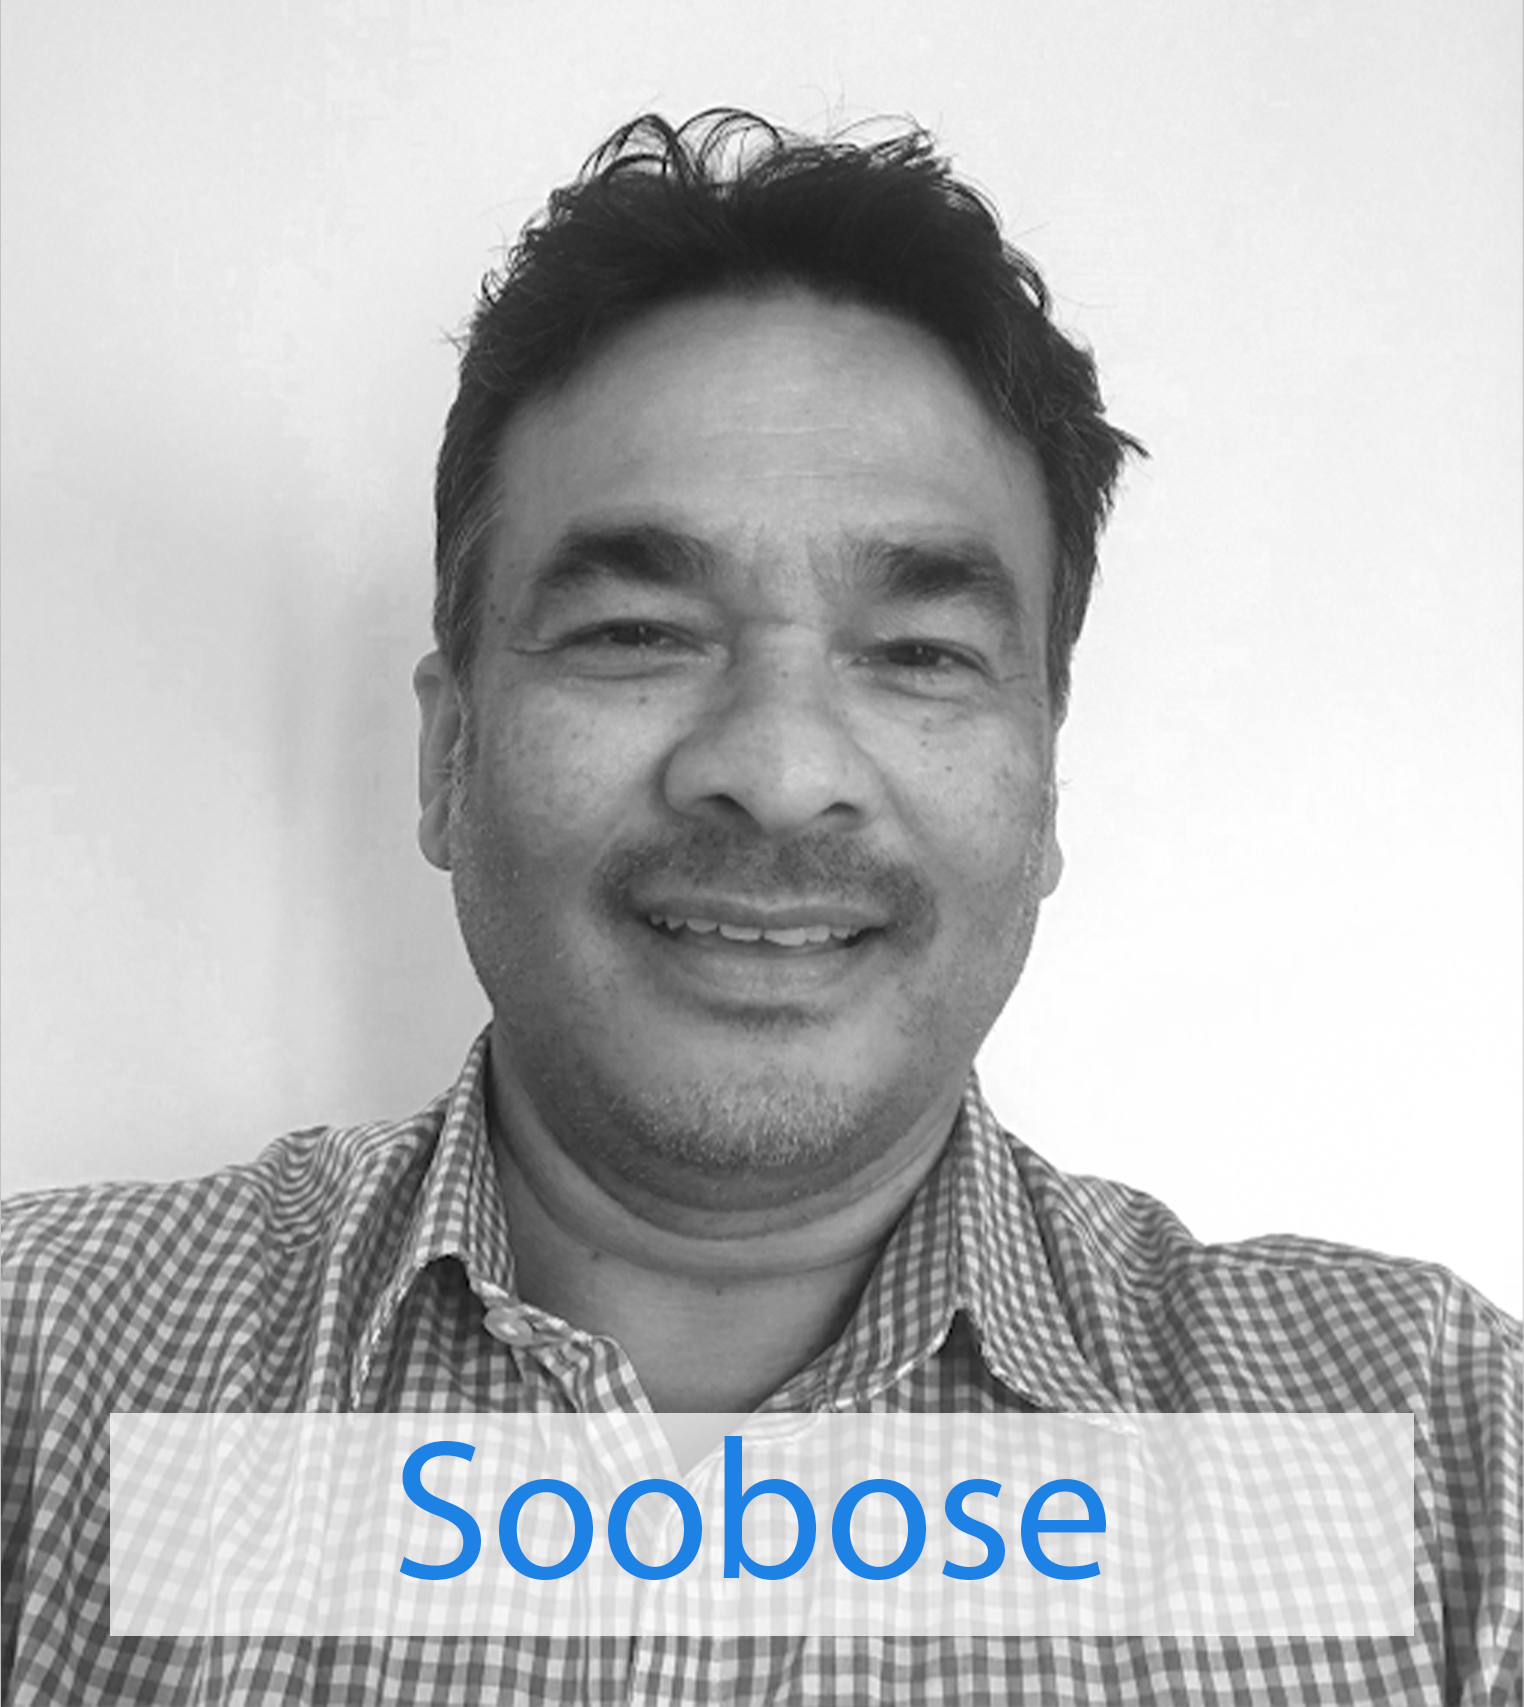 Meet me Soobose